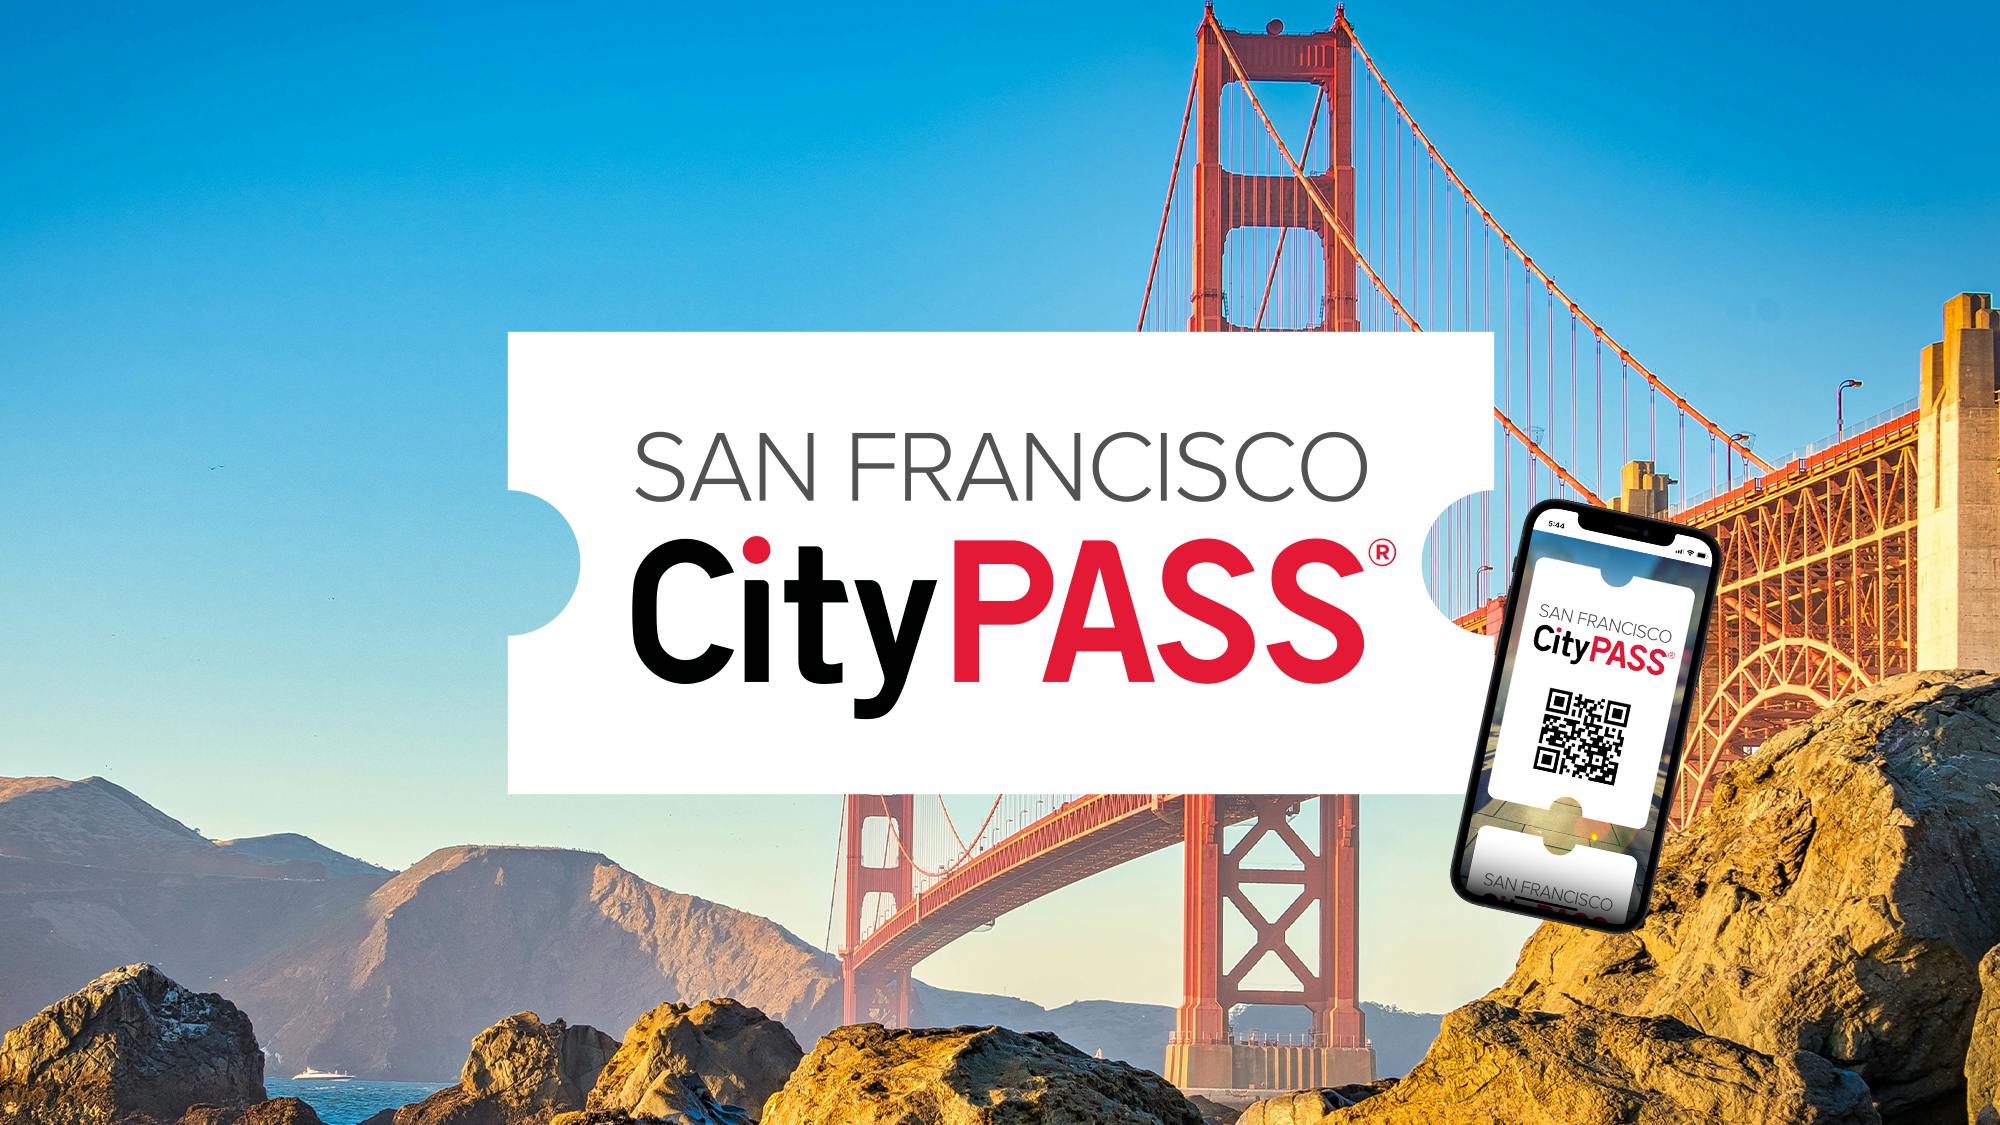 San Francisco CityPASS Mobile Ticket Musement